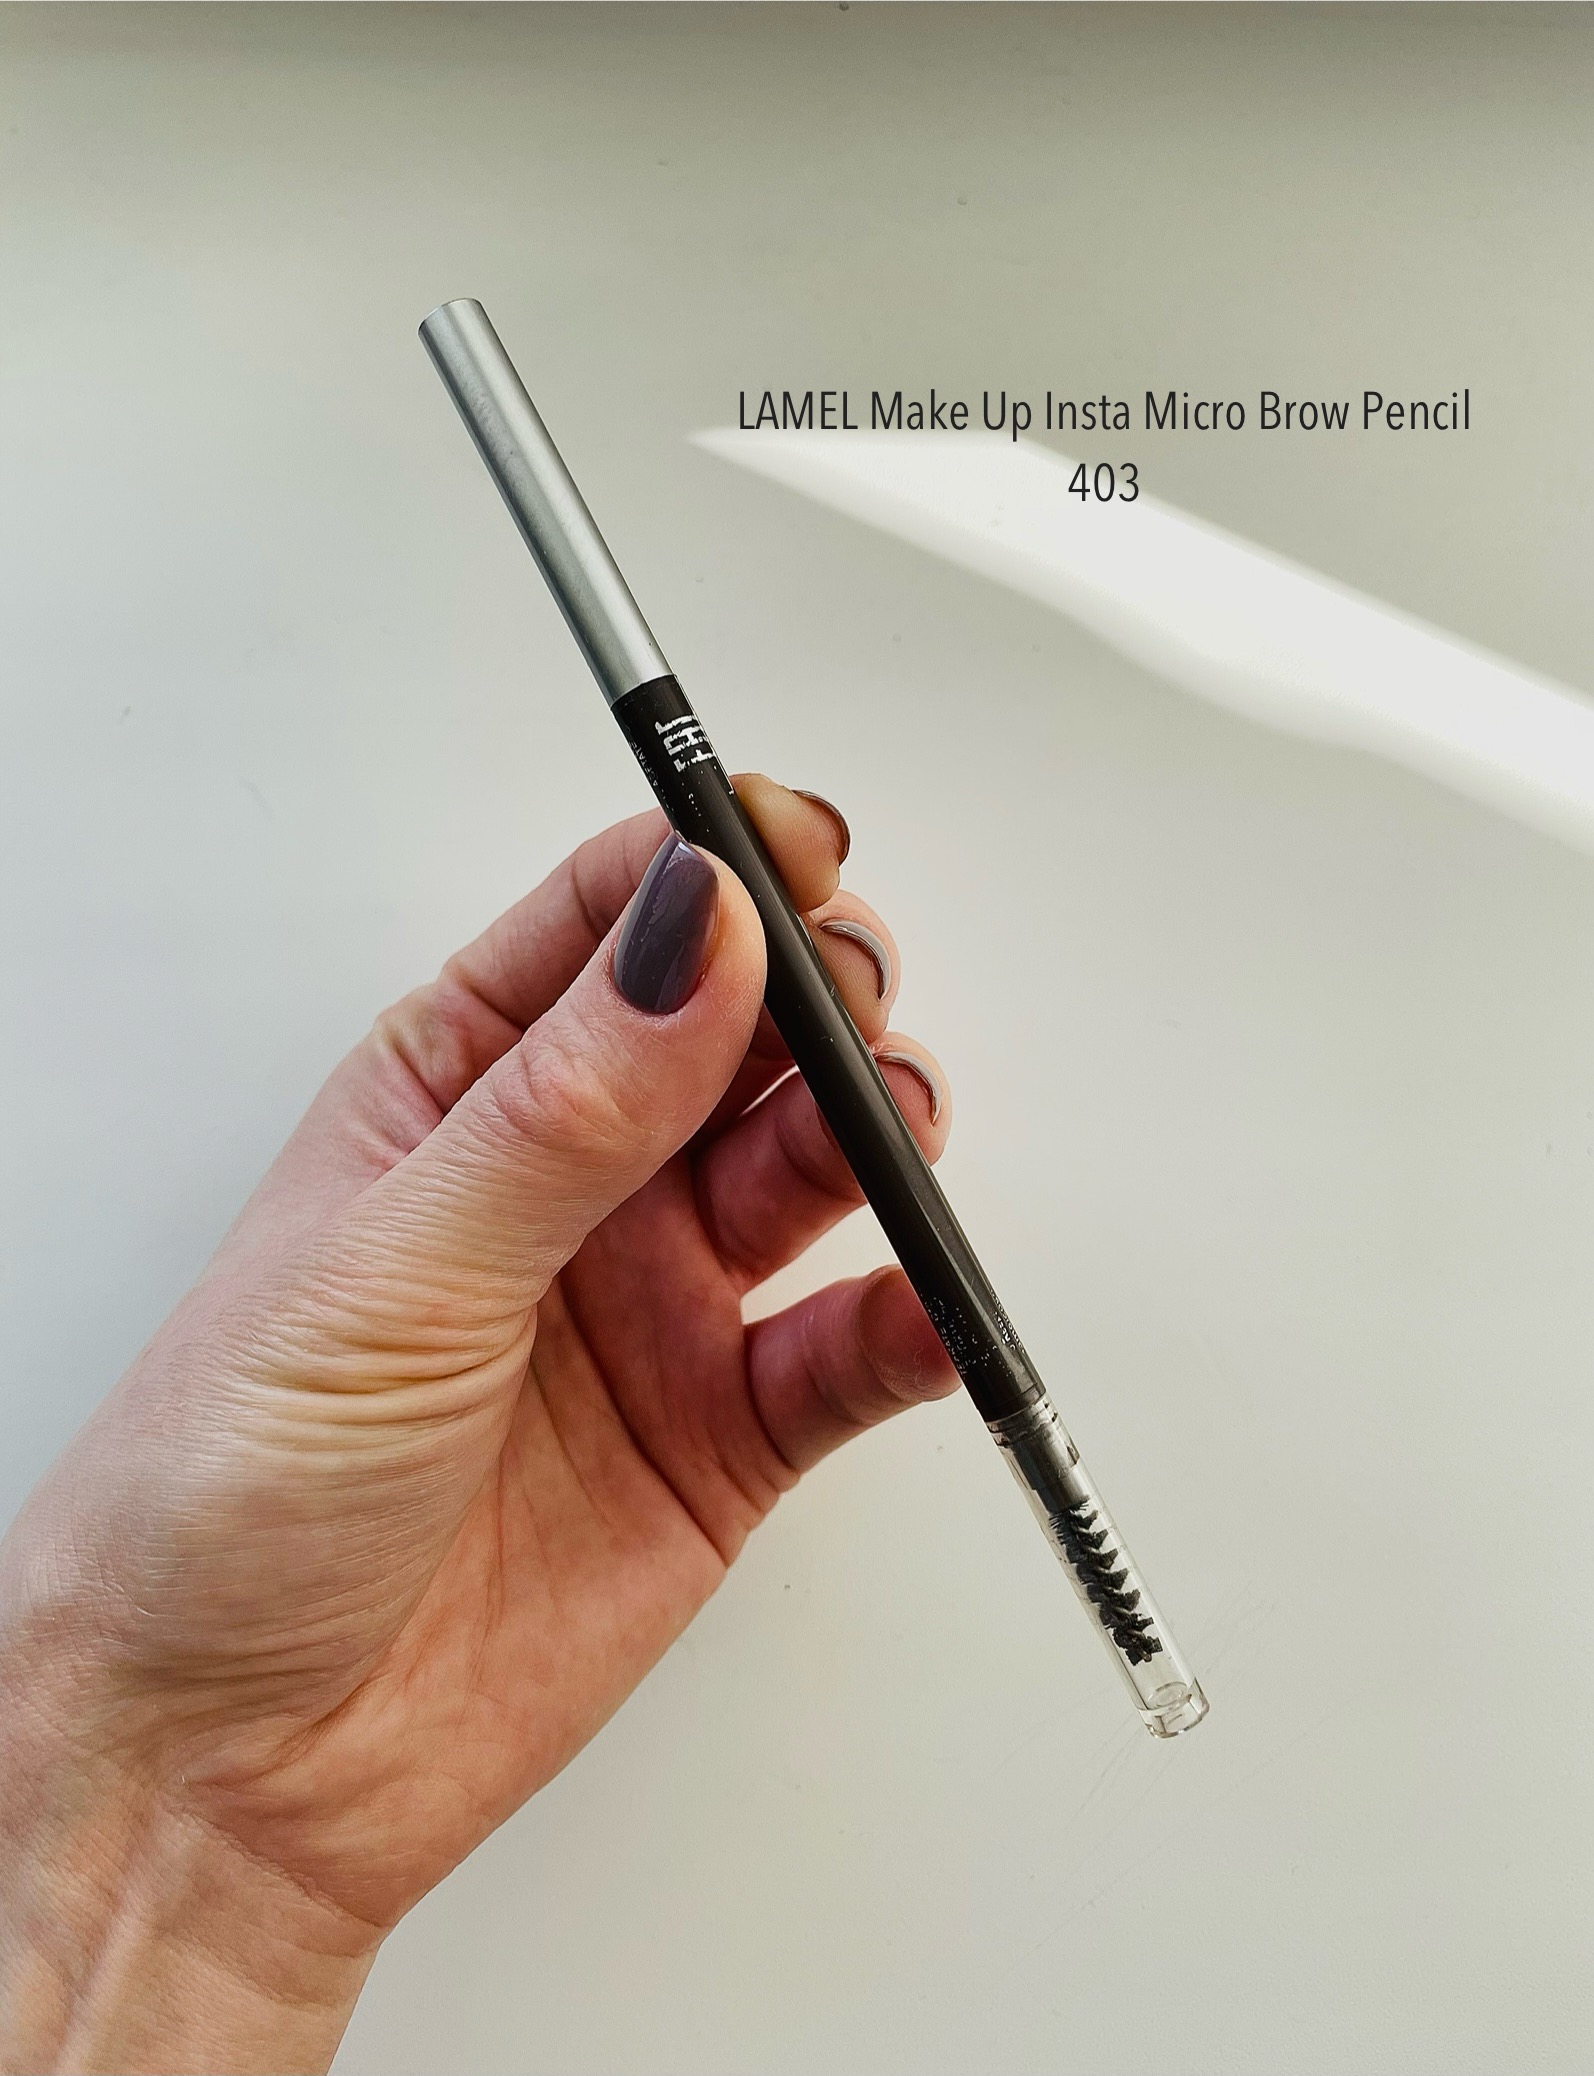 LAMEL Make Up Insta Micro Brow Pencil